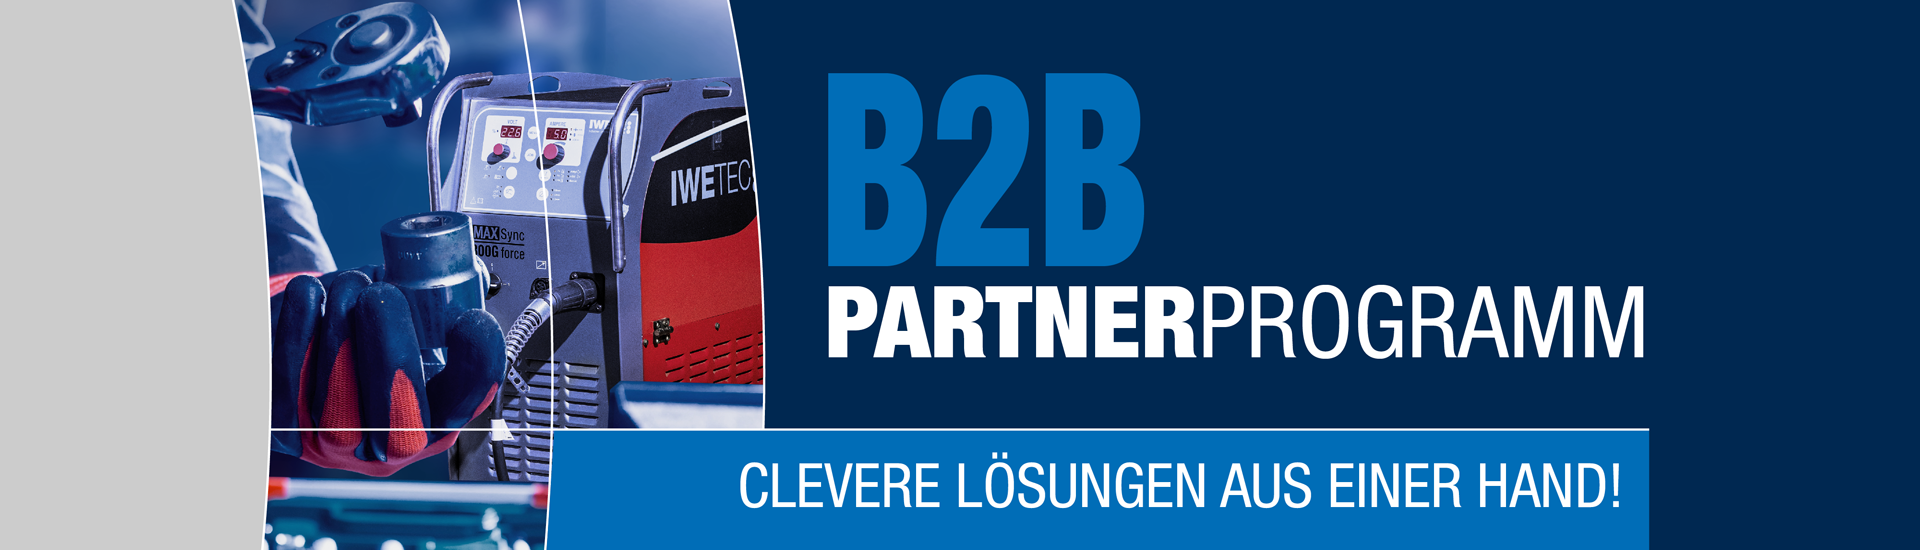 B2B Partnerprogramm - Clevere Lösungen